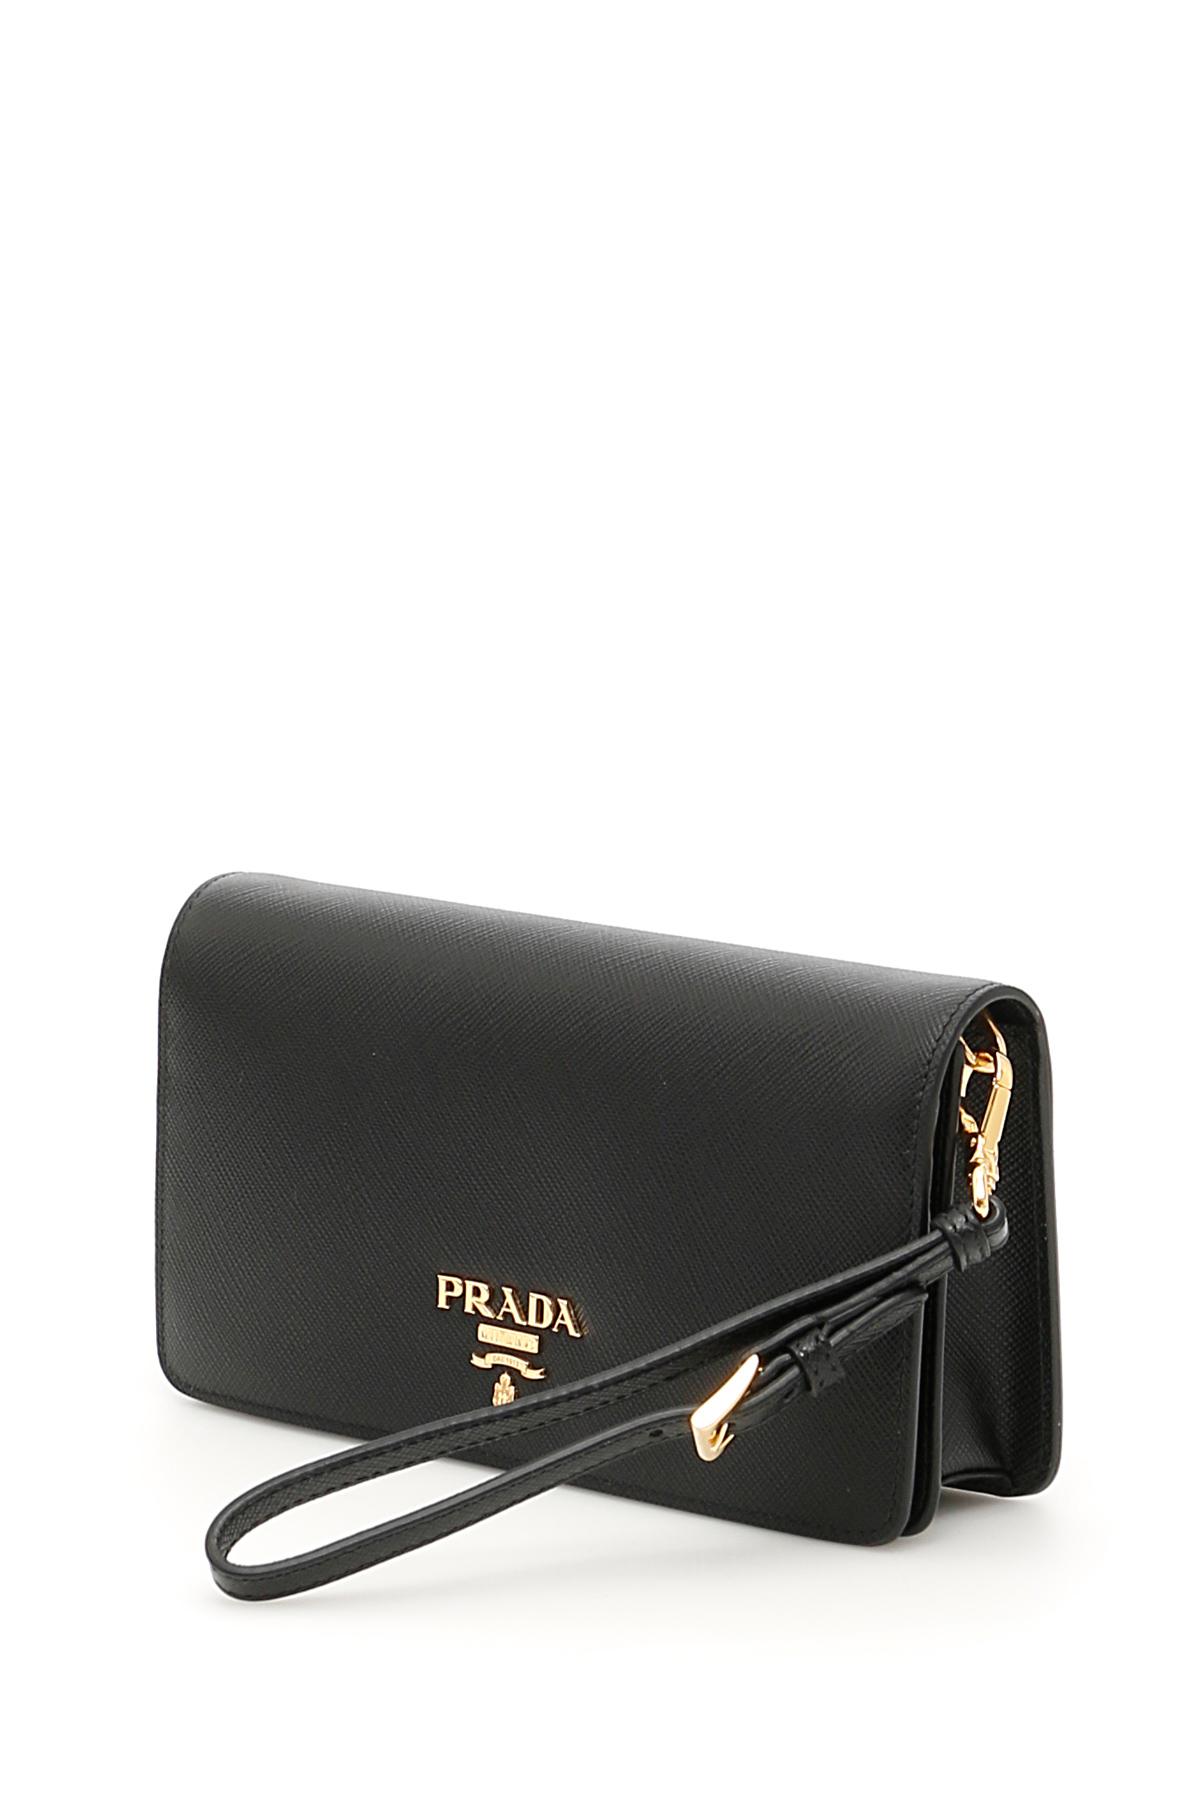 Prada Wallet On Chain in Nero (Black) | Lyst